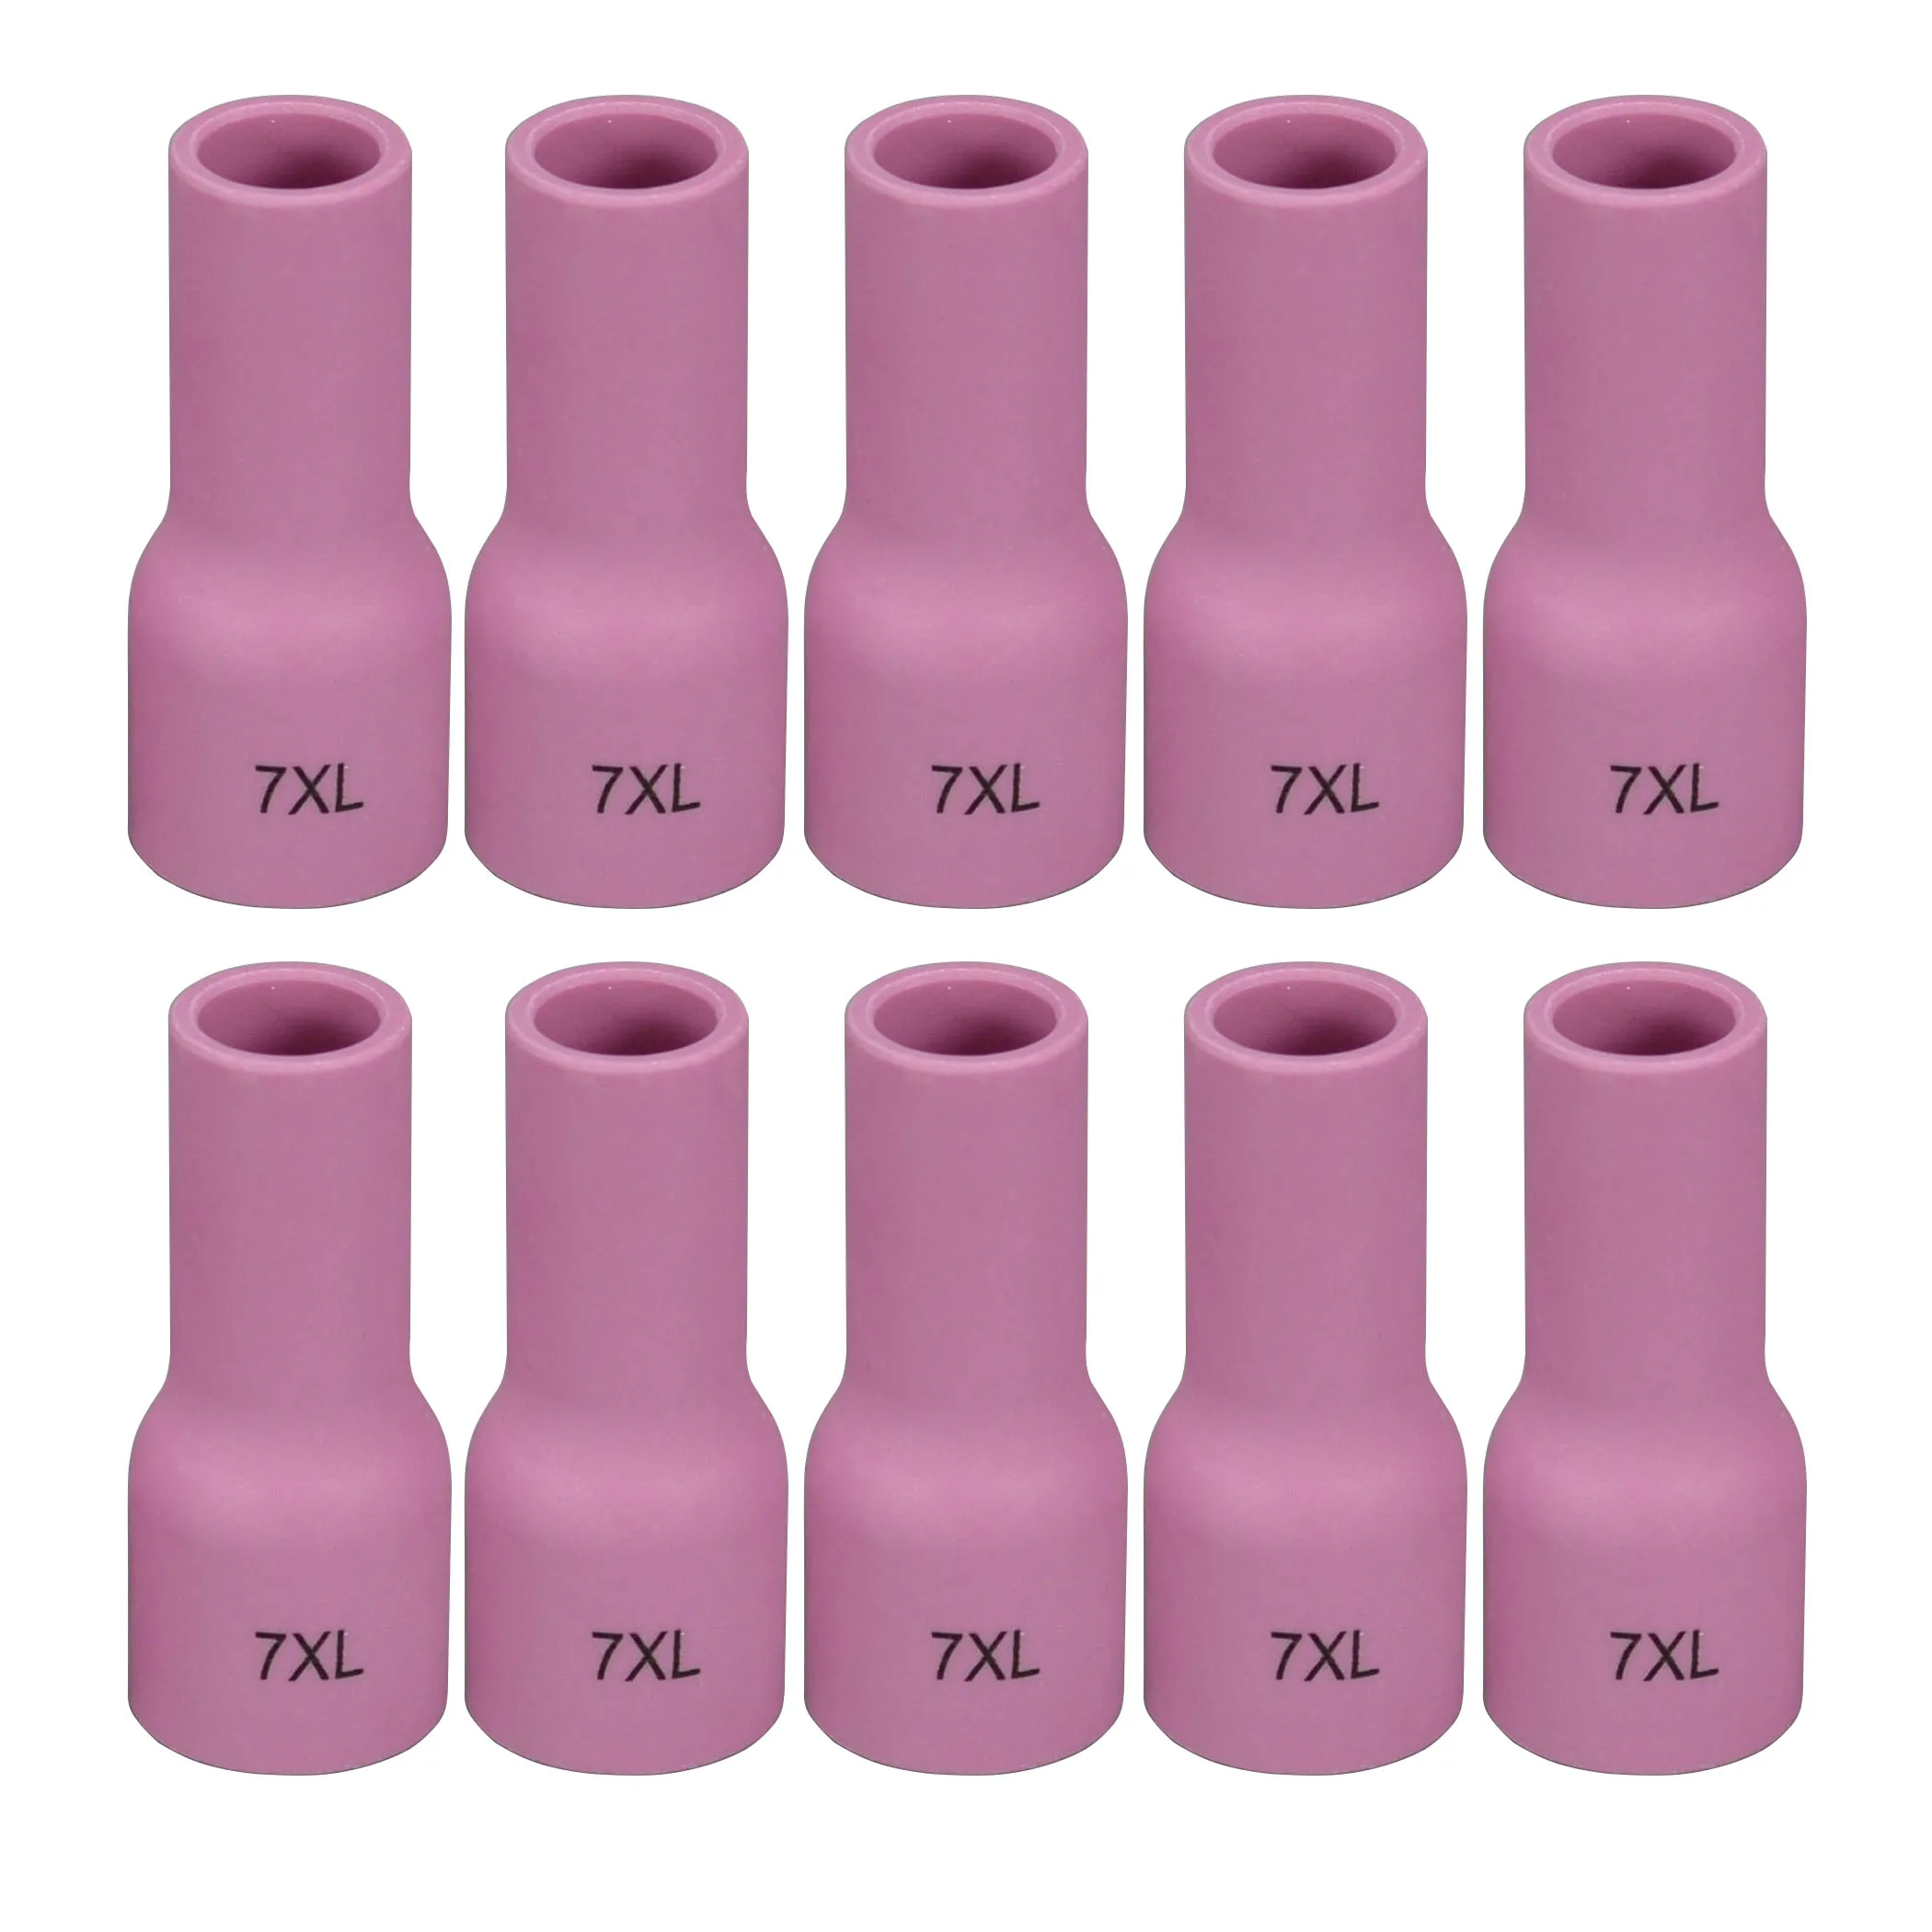 

TIG Gas Lens Aluminia Nozzle Ceramic Cup Extra Long 53N61XL (#7XL 7/16" Orifice) for SR WP 9 20 25 TIG Welding Torch 10pk